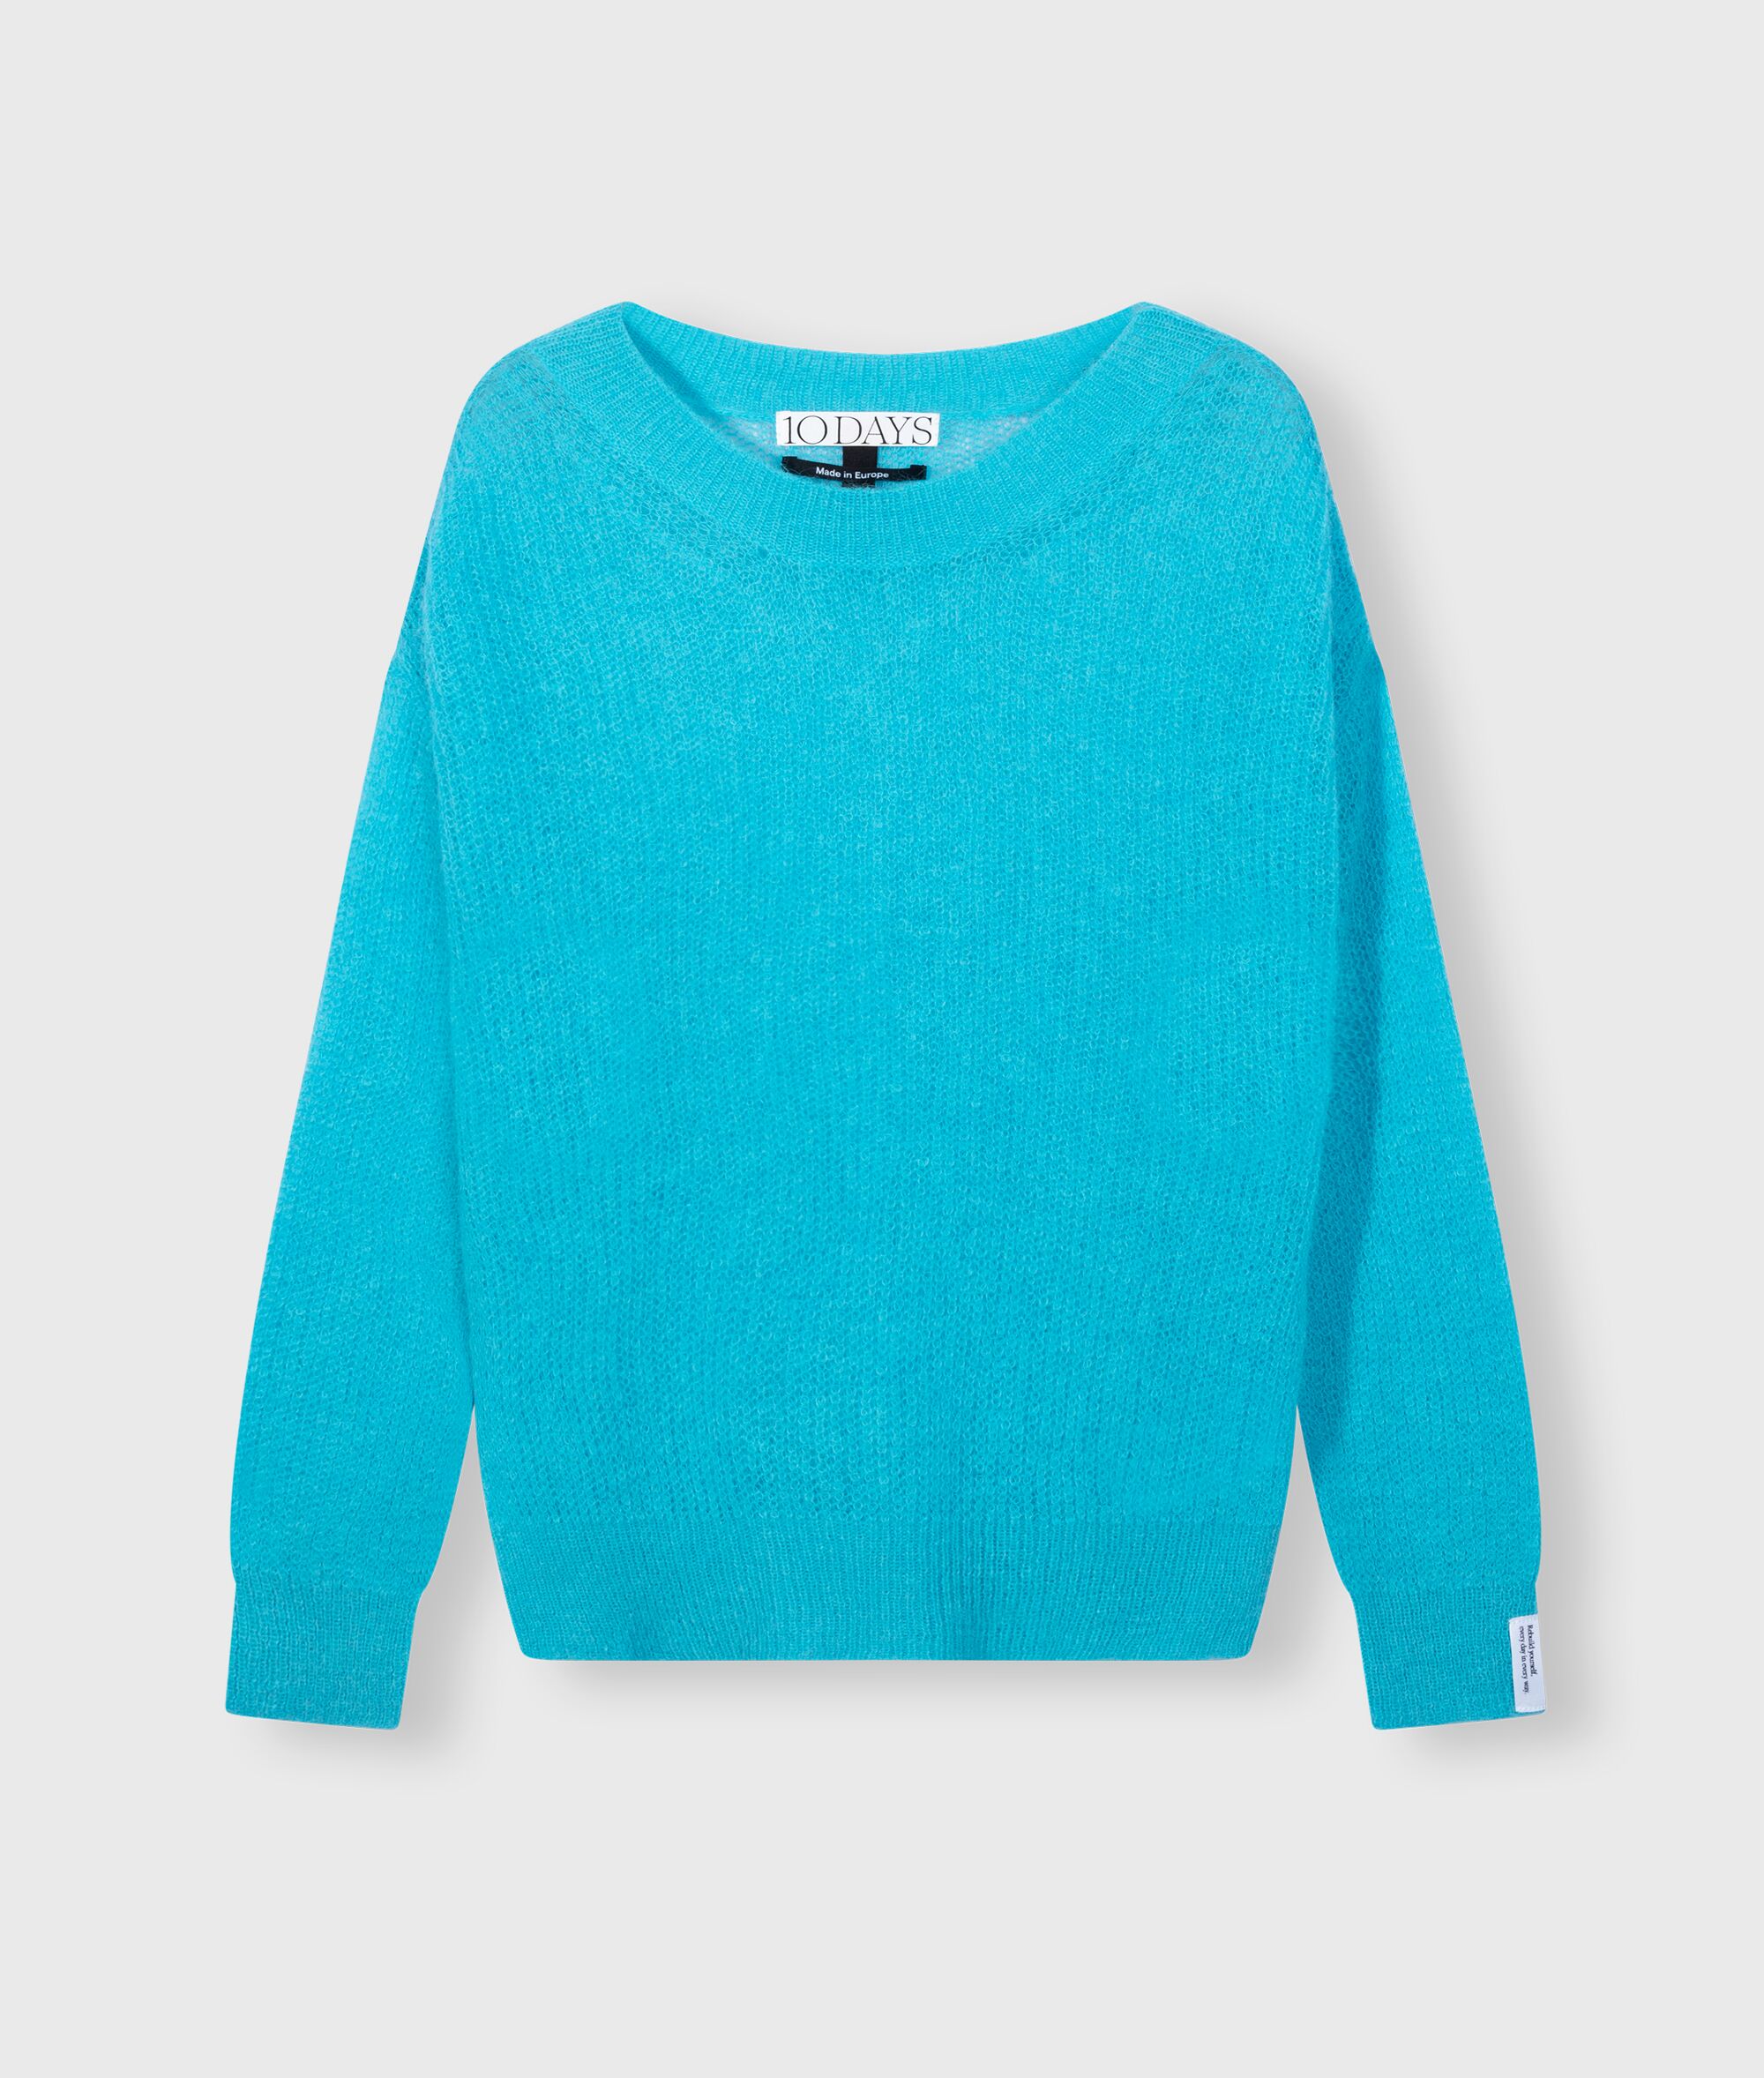 20 606 4203 1289 10days Amsterdam Loose Thin Knit Sweater Laguna Blue (2)